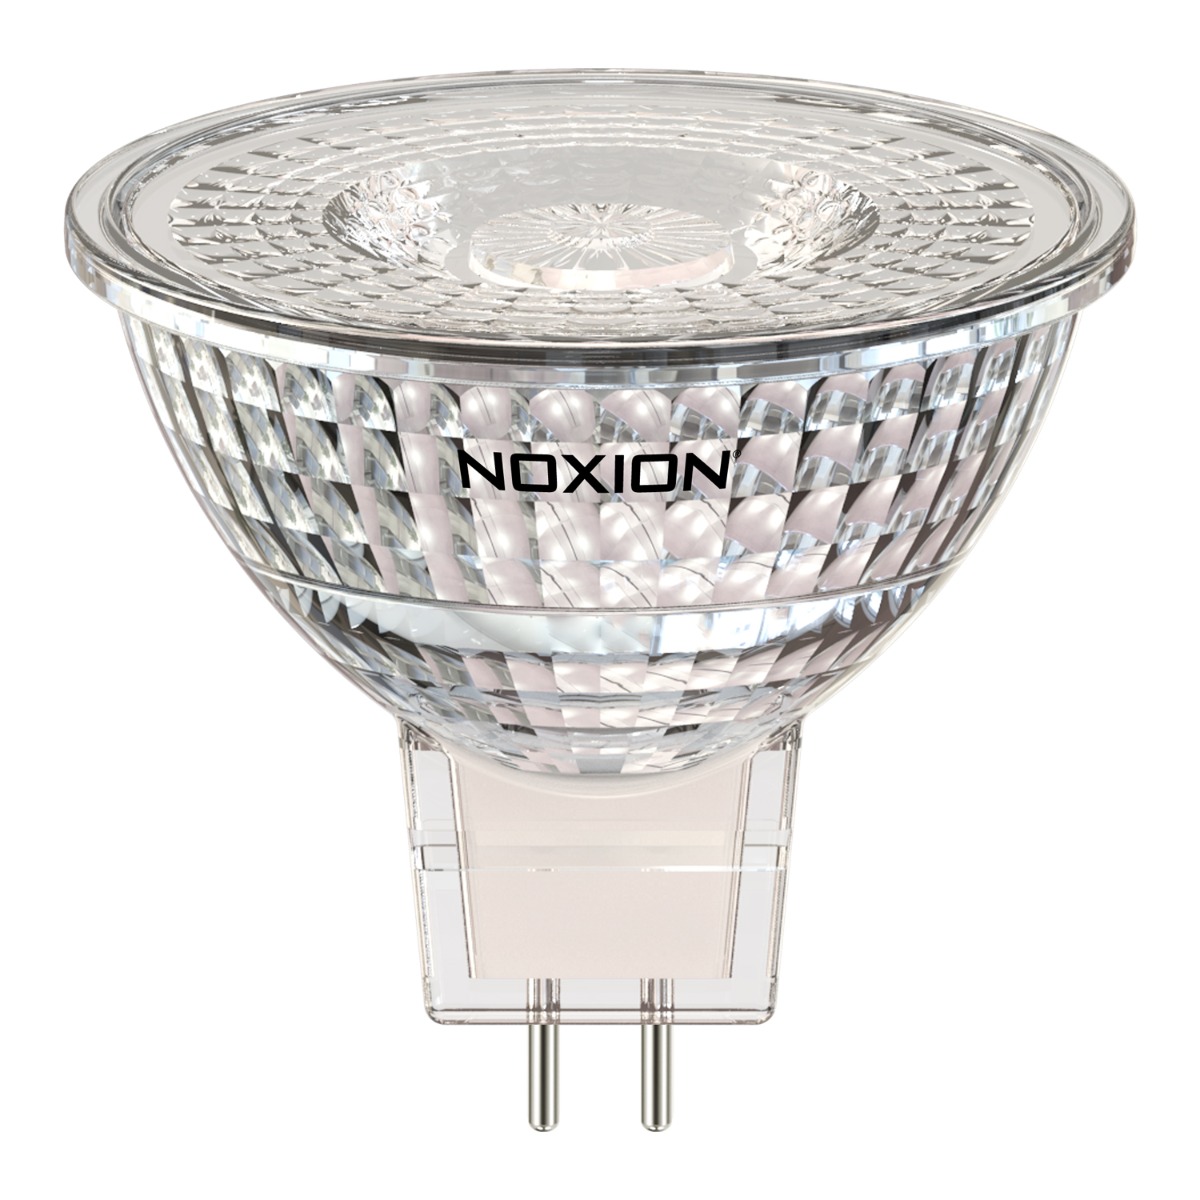 Noxion LED Spot GU5.3 5W 830 60D 470lm | Dimmable - Warm White - Replaces 35W